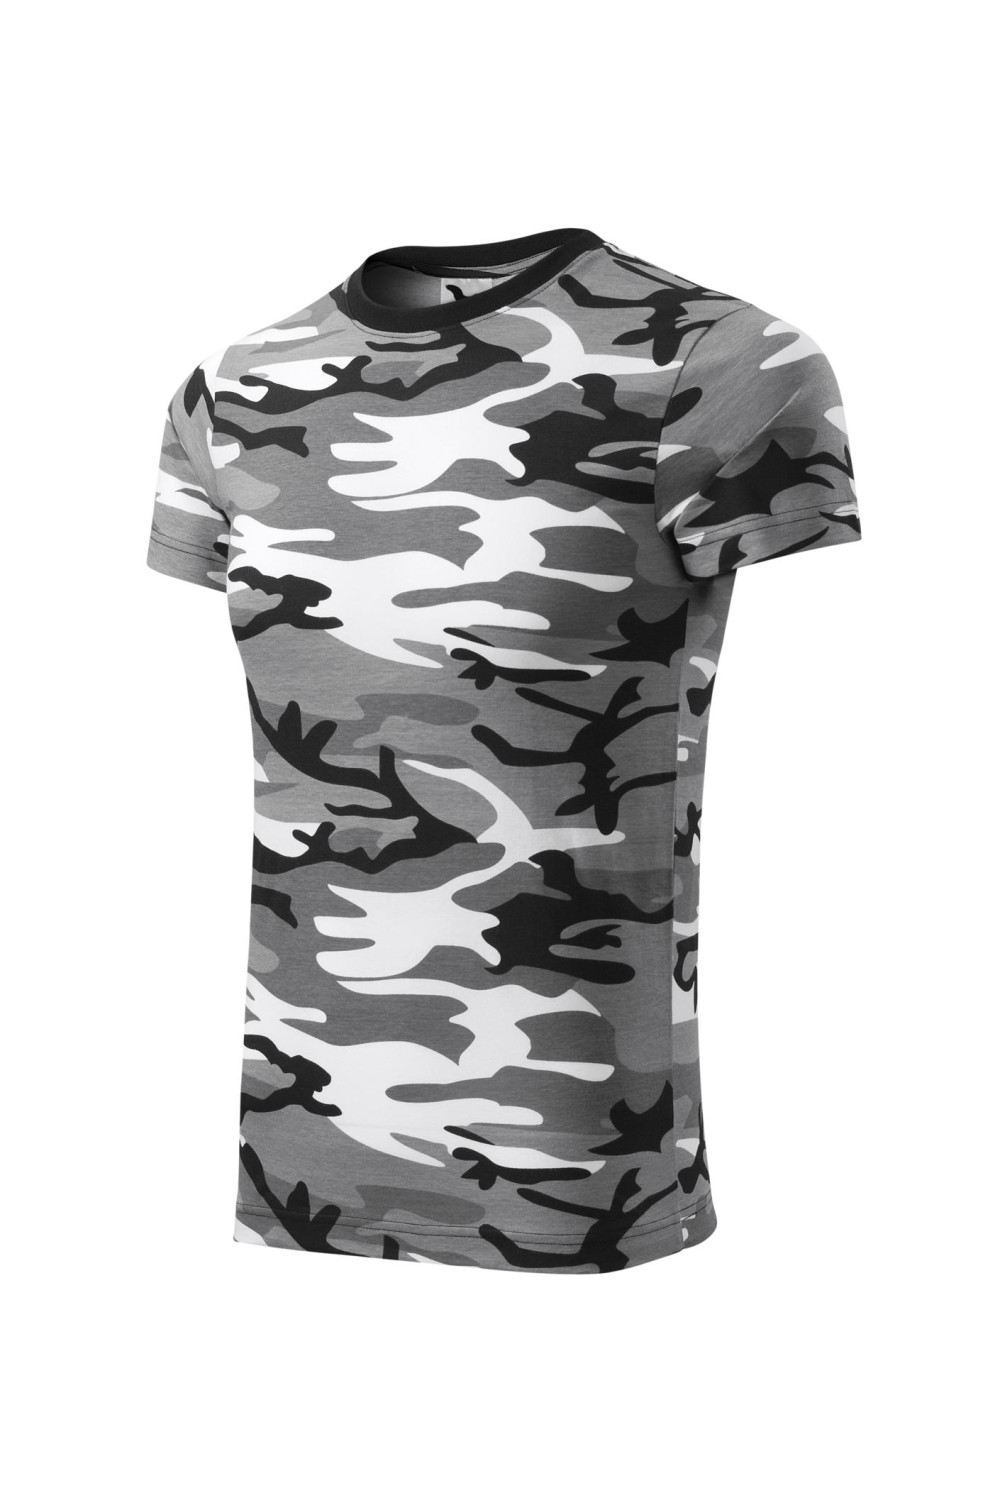 CAMOUFLAGE 144 Koszulka męska 100% bawełna koszulki / T-shirt camouflage gray